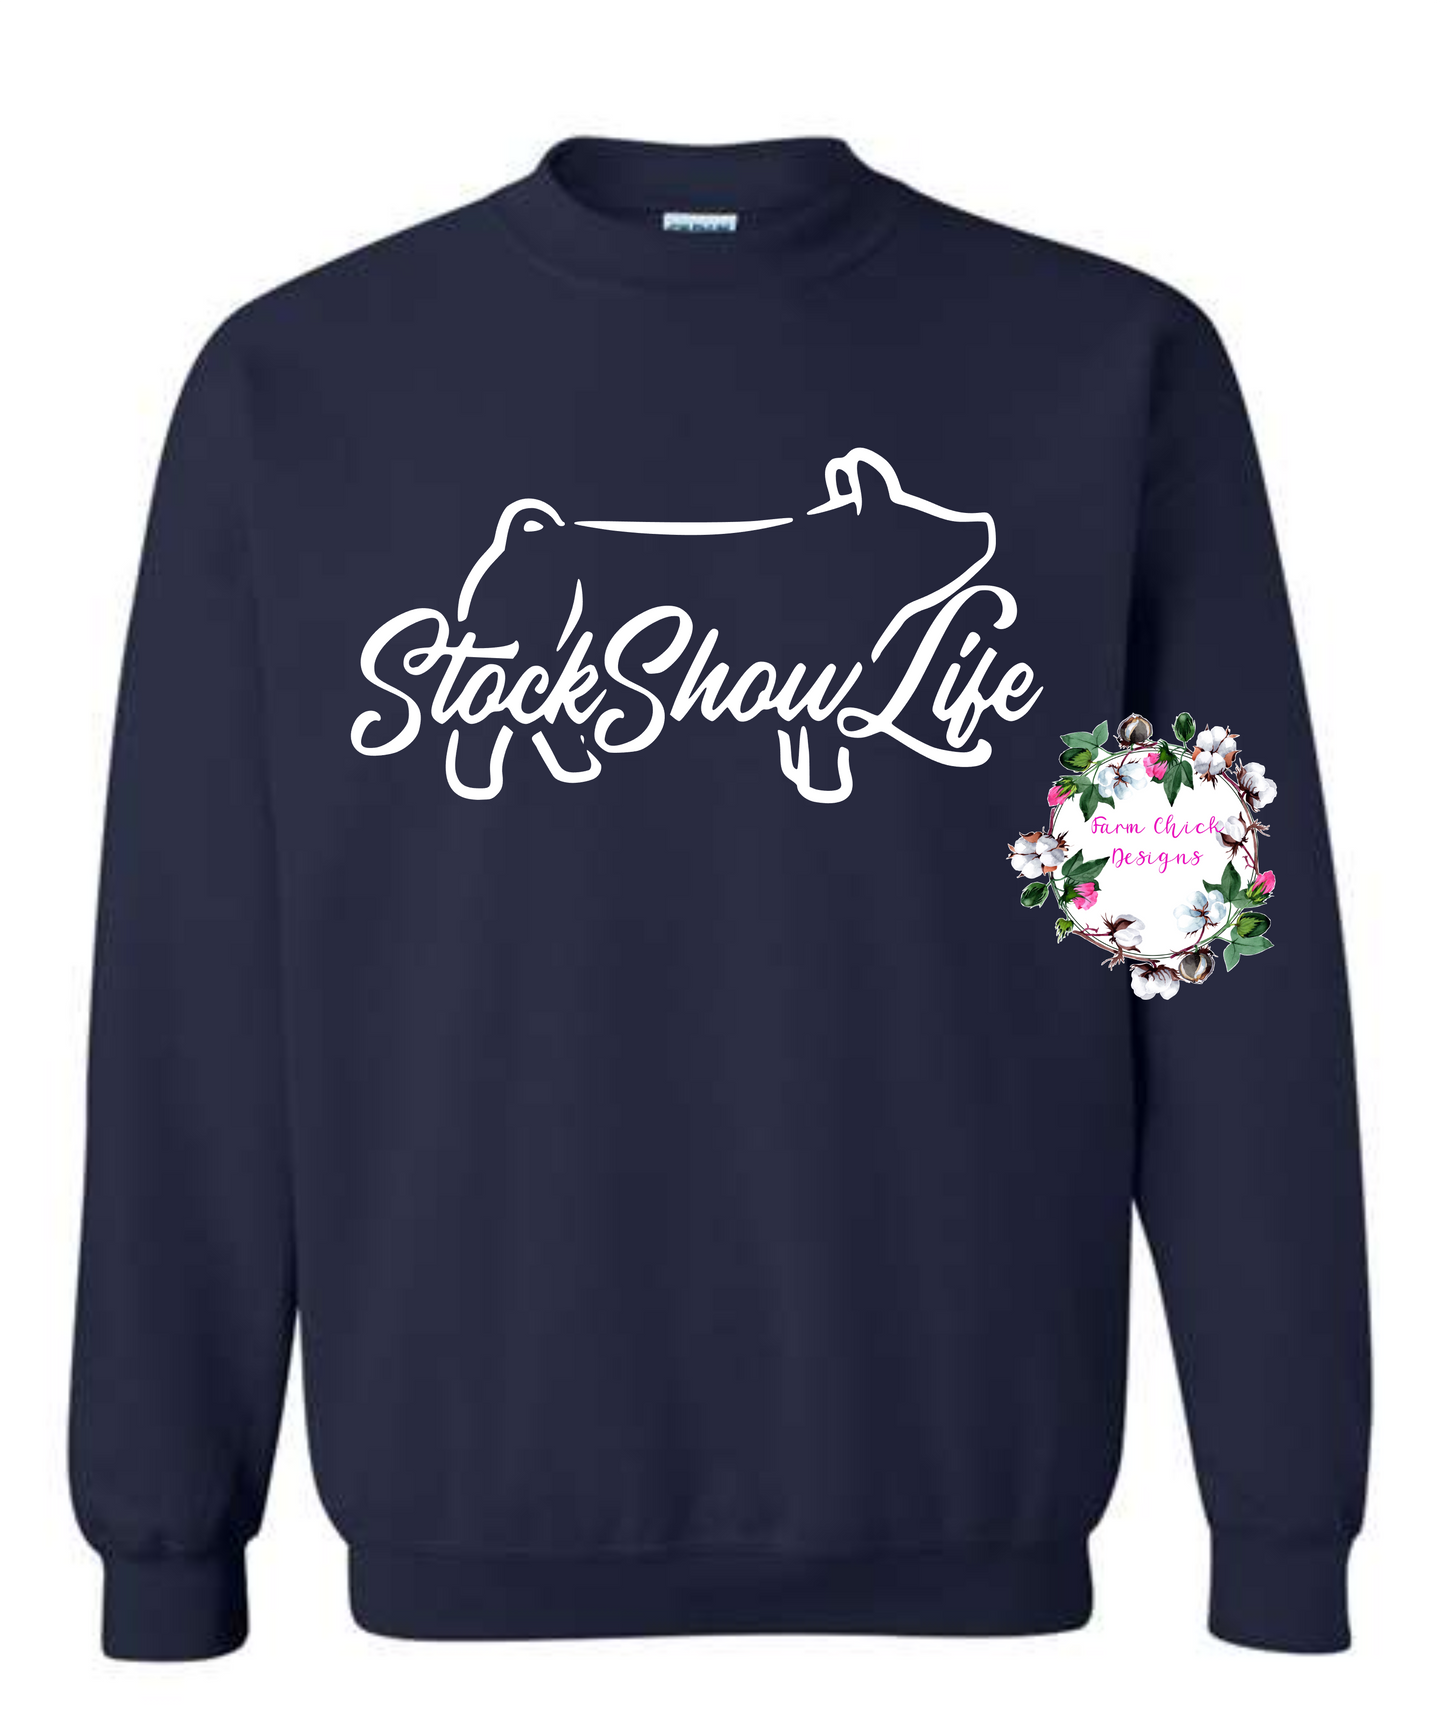 Show Pig Stock Show Life Youth Crewneck Sweatshirt